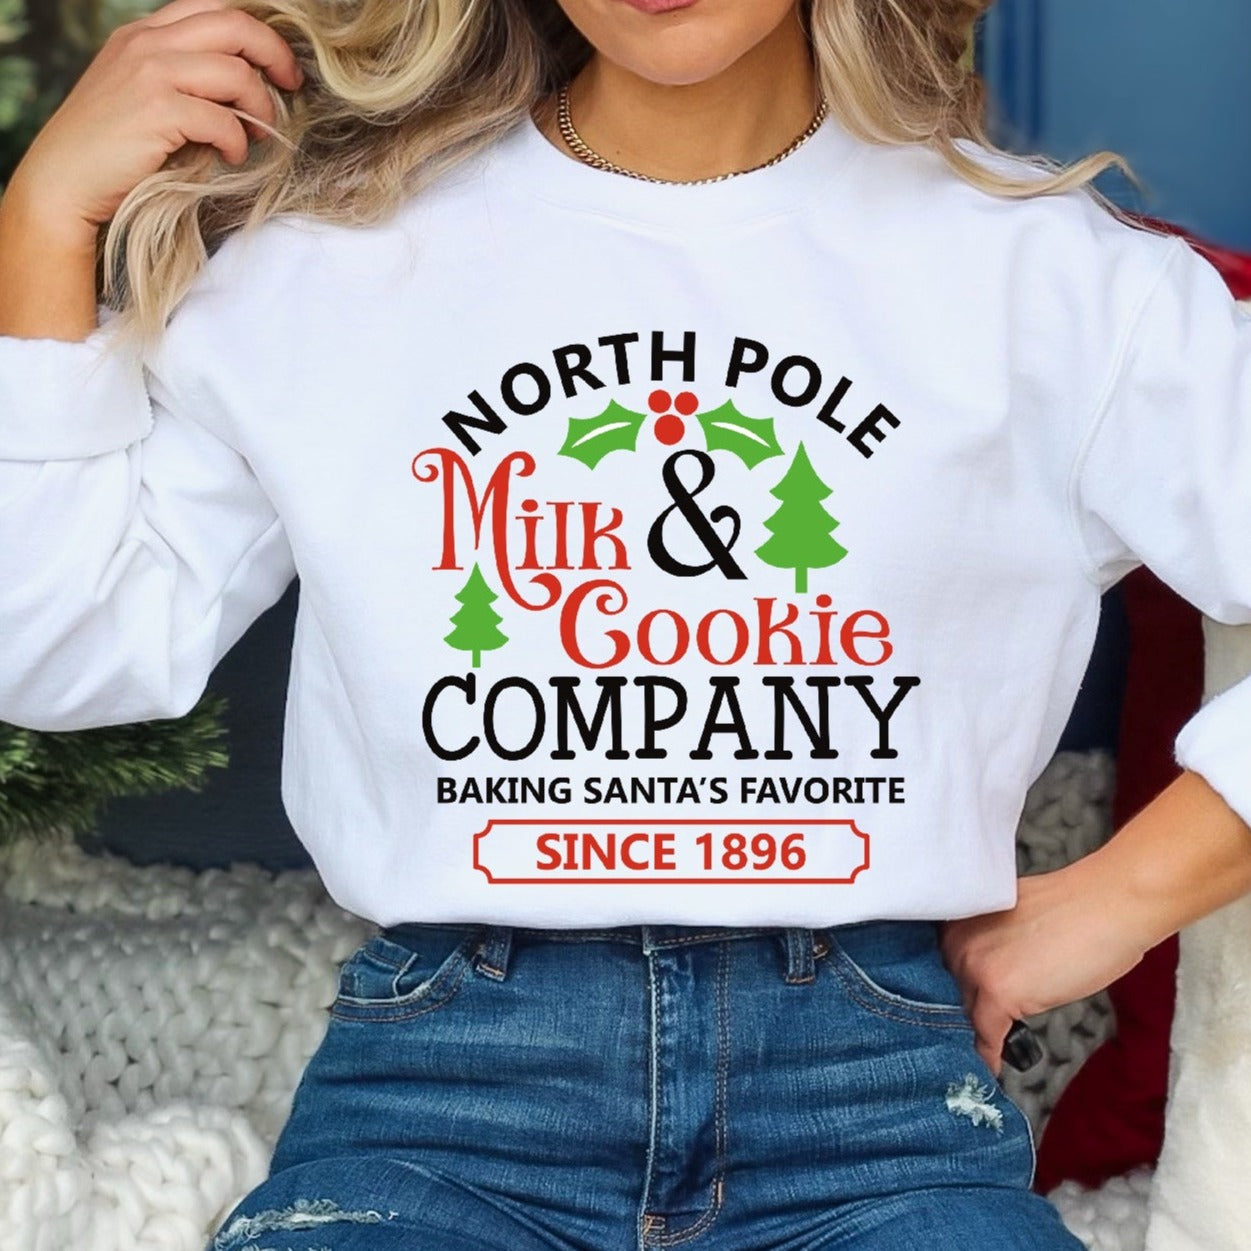 North Pole Milk & Cookie Co. Unisex Sweatshirt